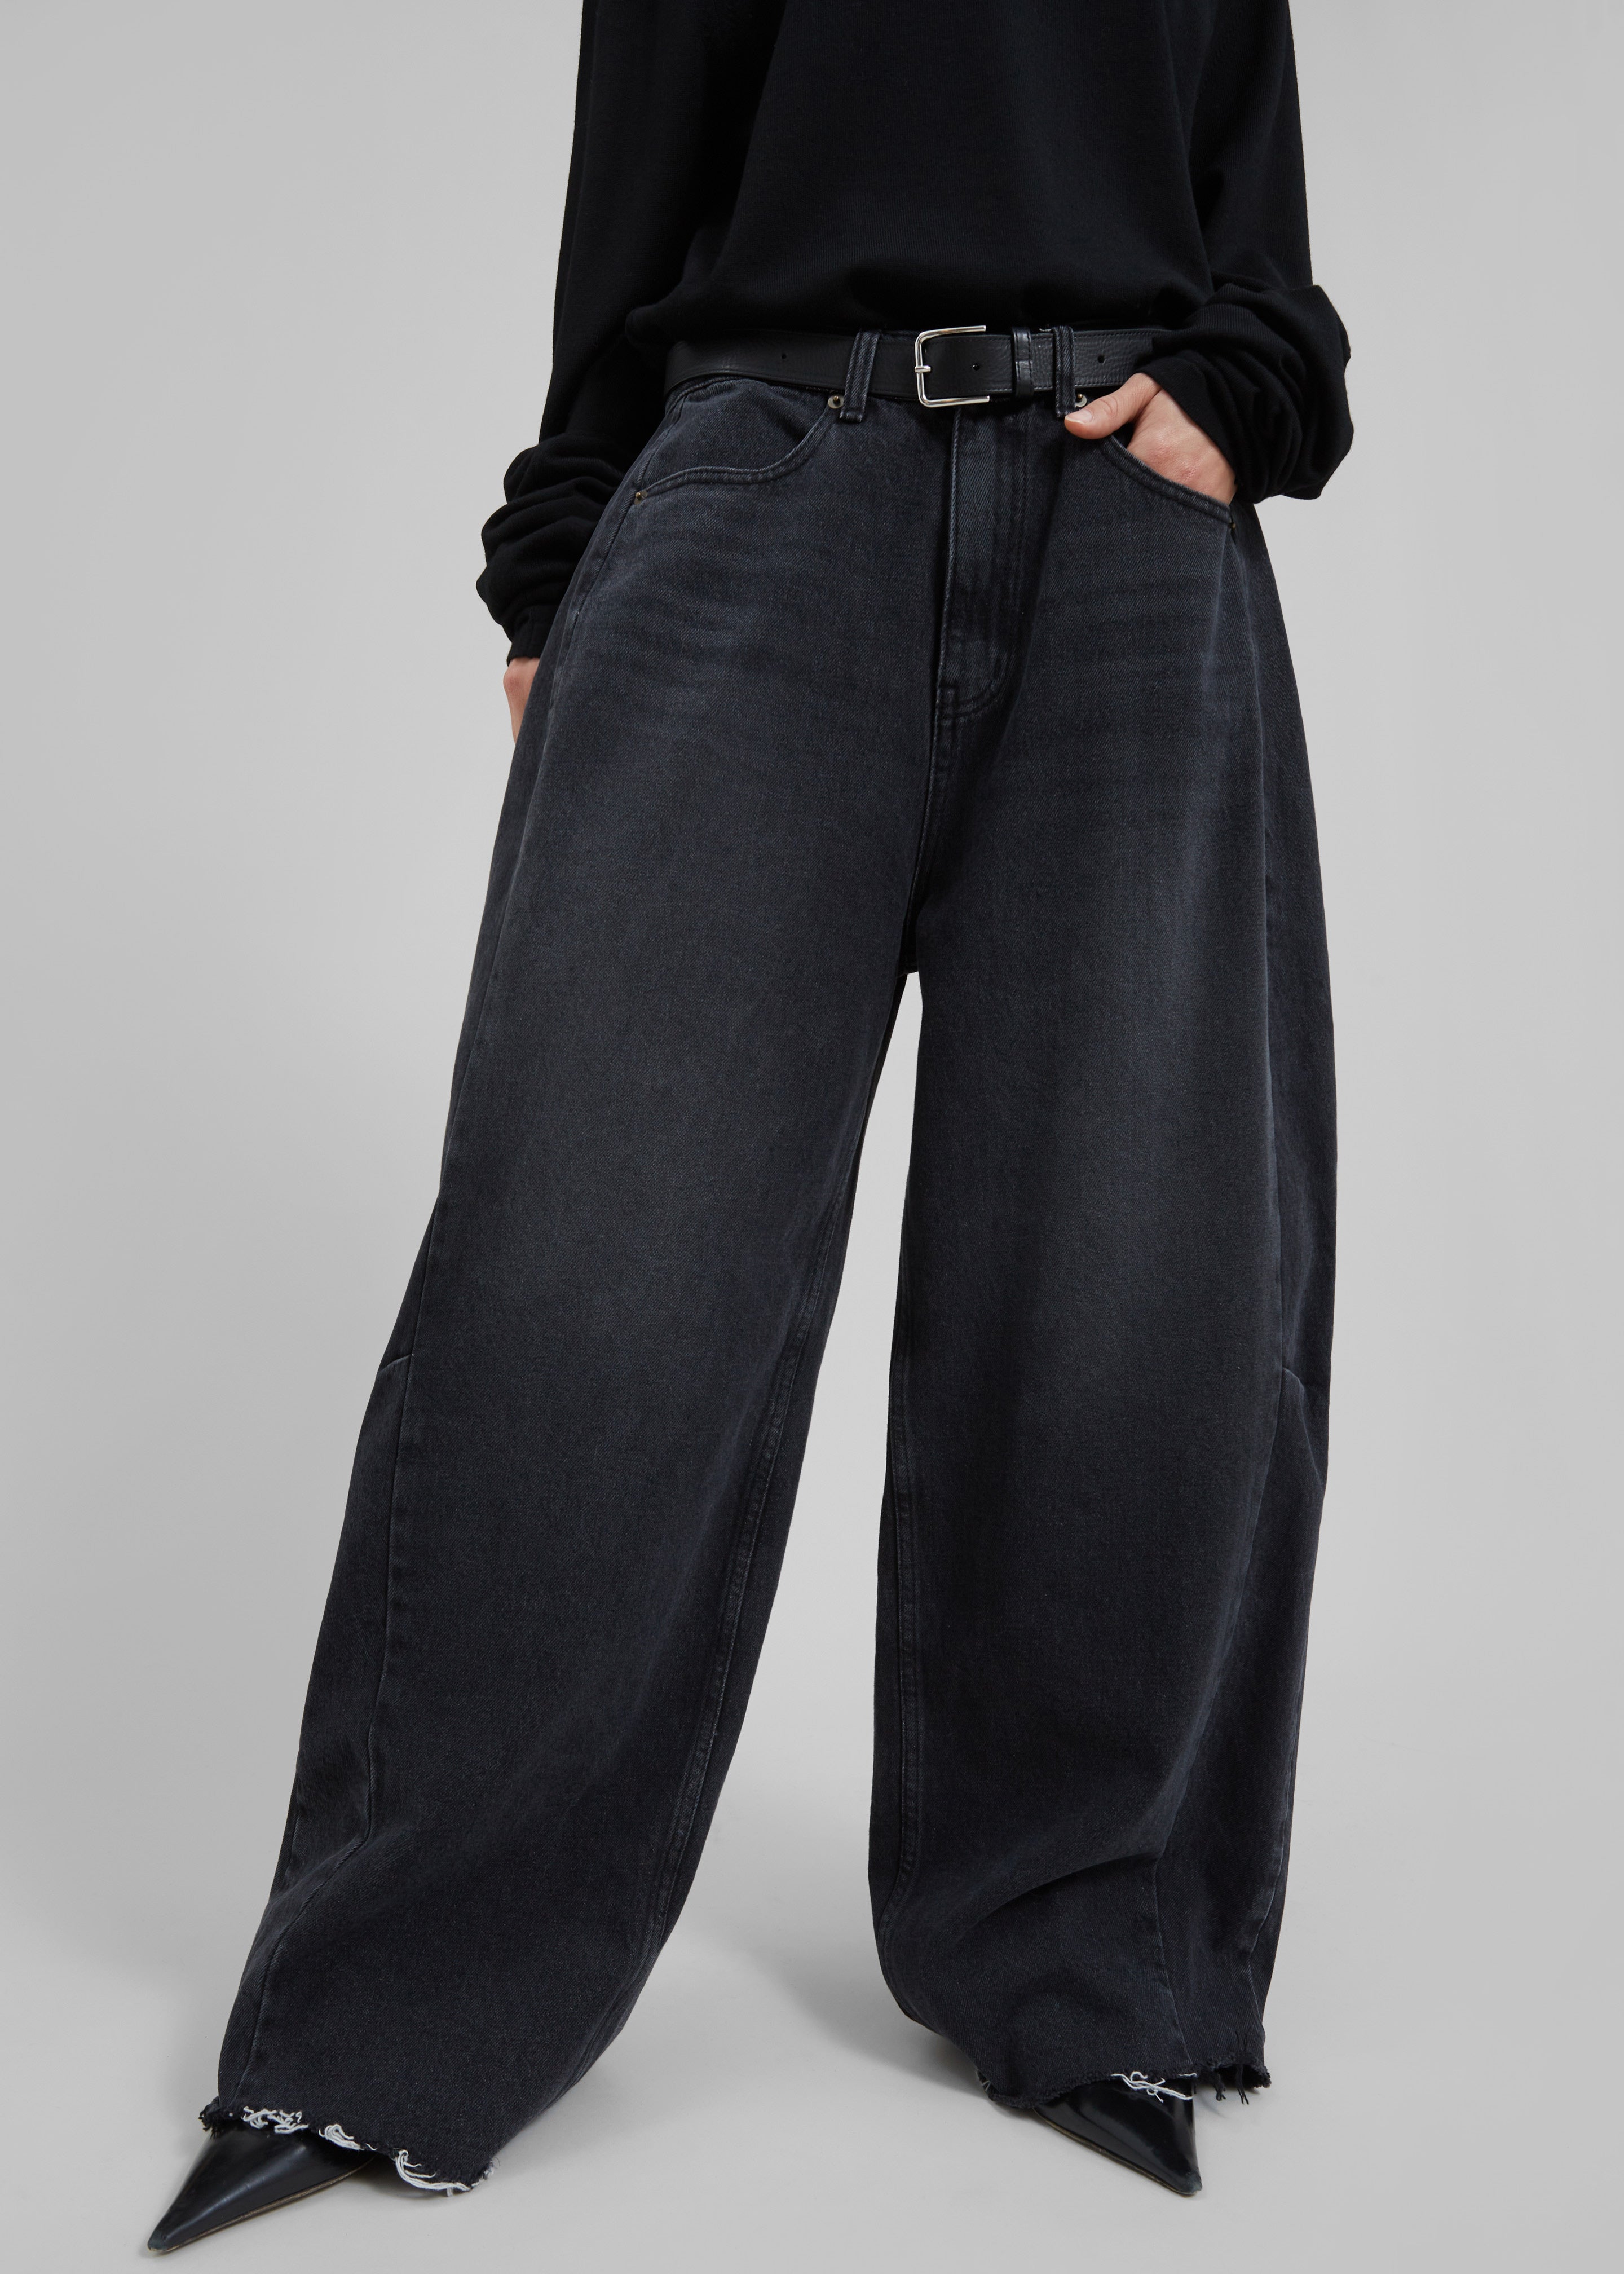 Gatlin Jeans - Black Wash - 5